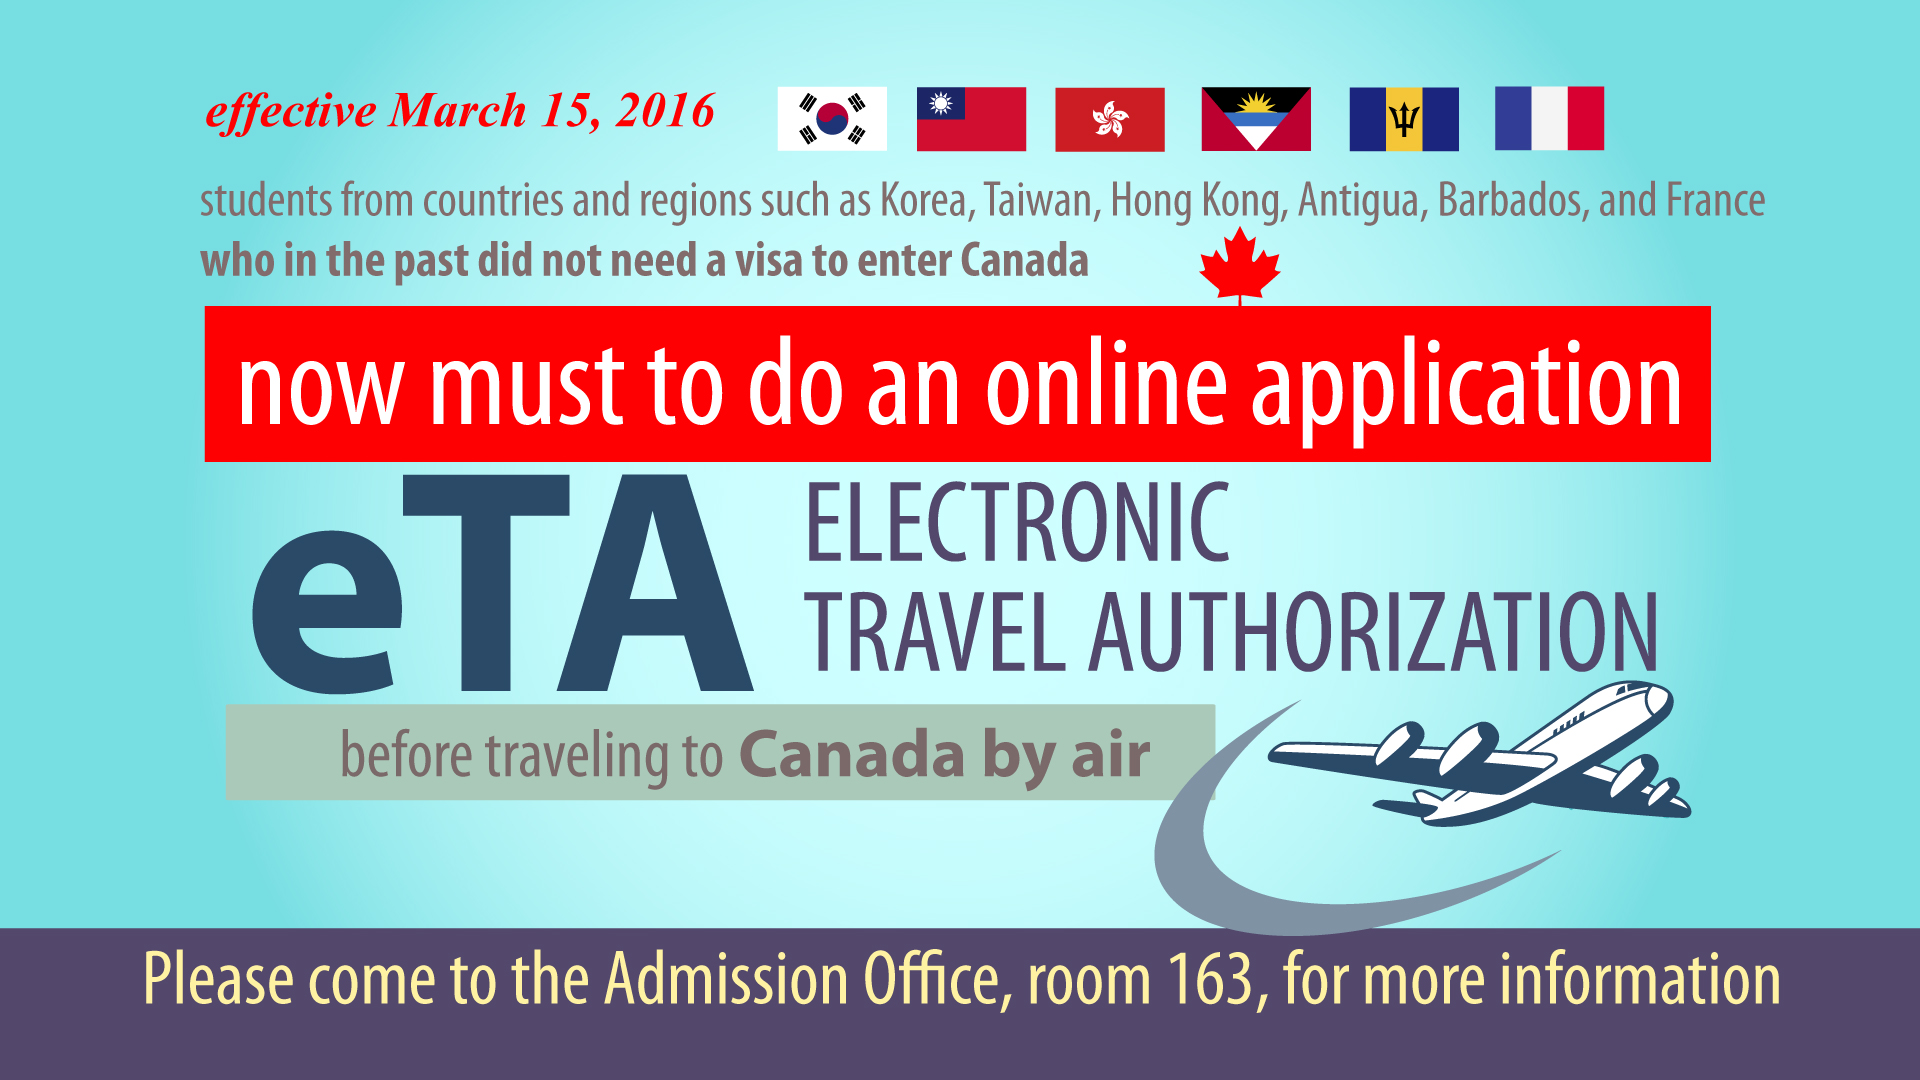 electronic travel authority system